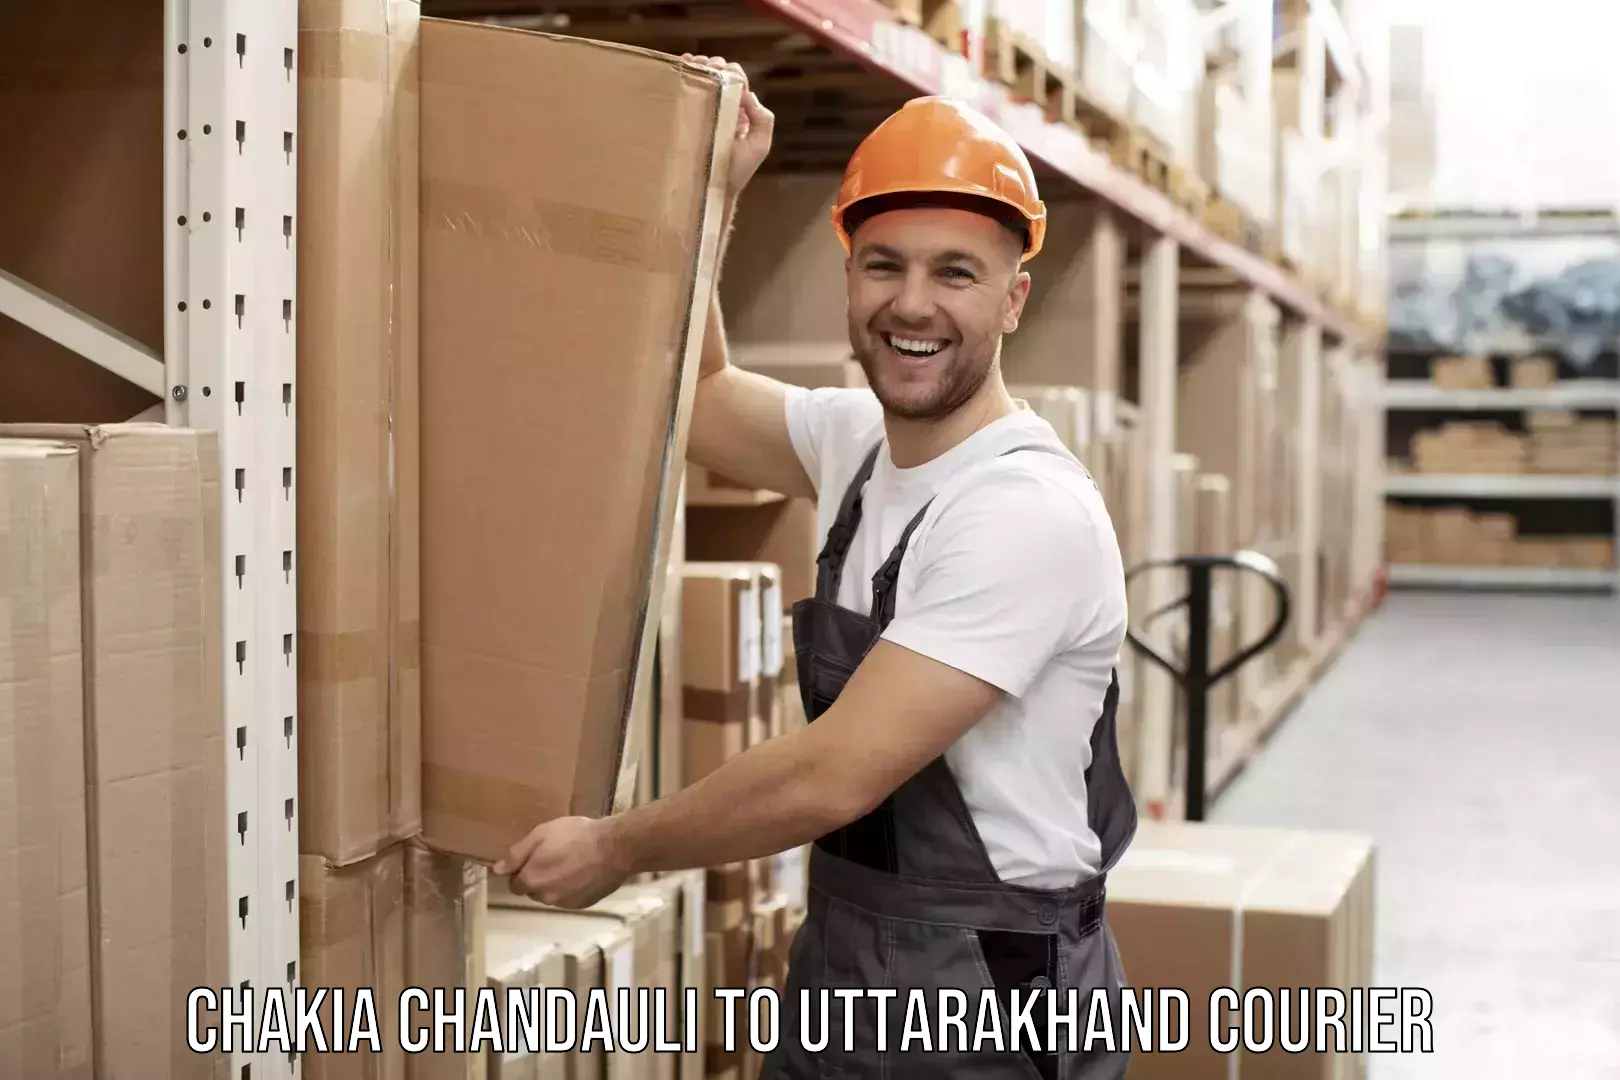 Home goods moving company Chakia Chandauli to Uttarakhand